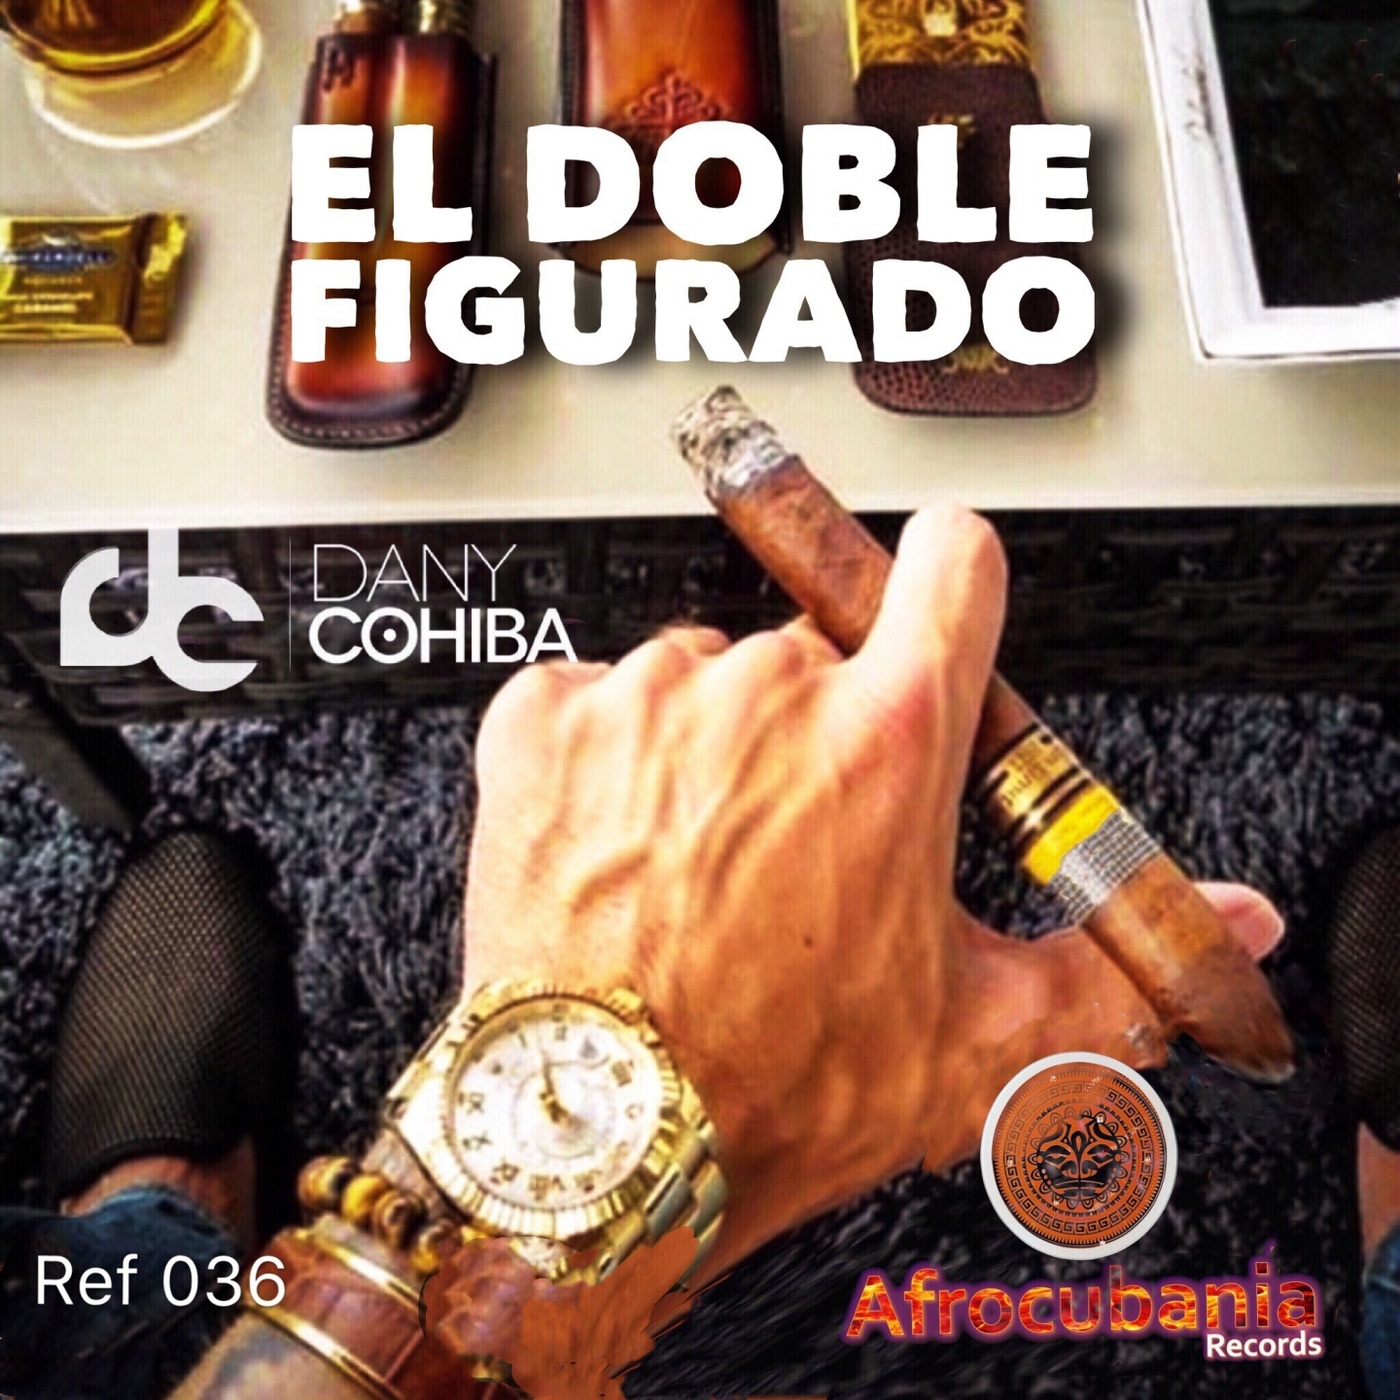 Dany Cohiba - El Doble Figurado / Afrocubania Records